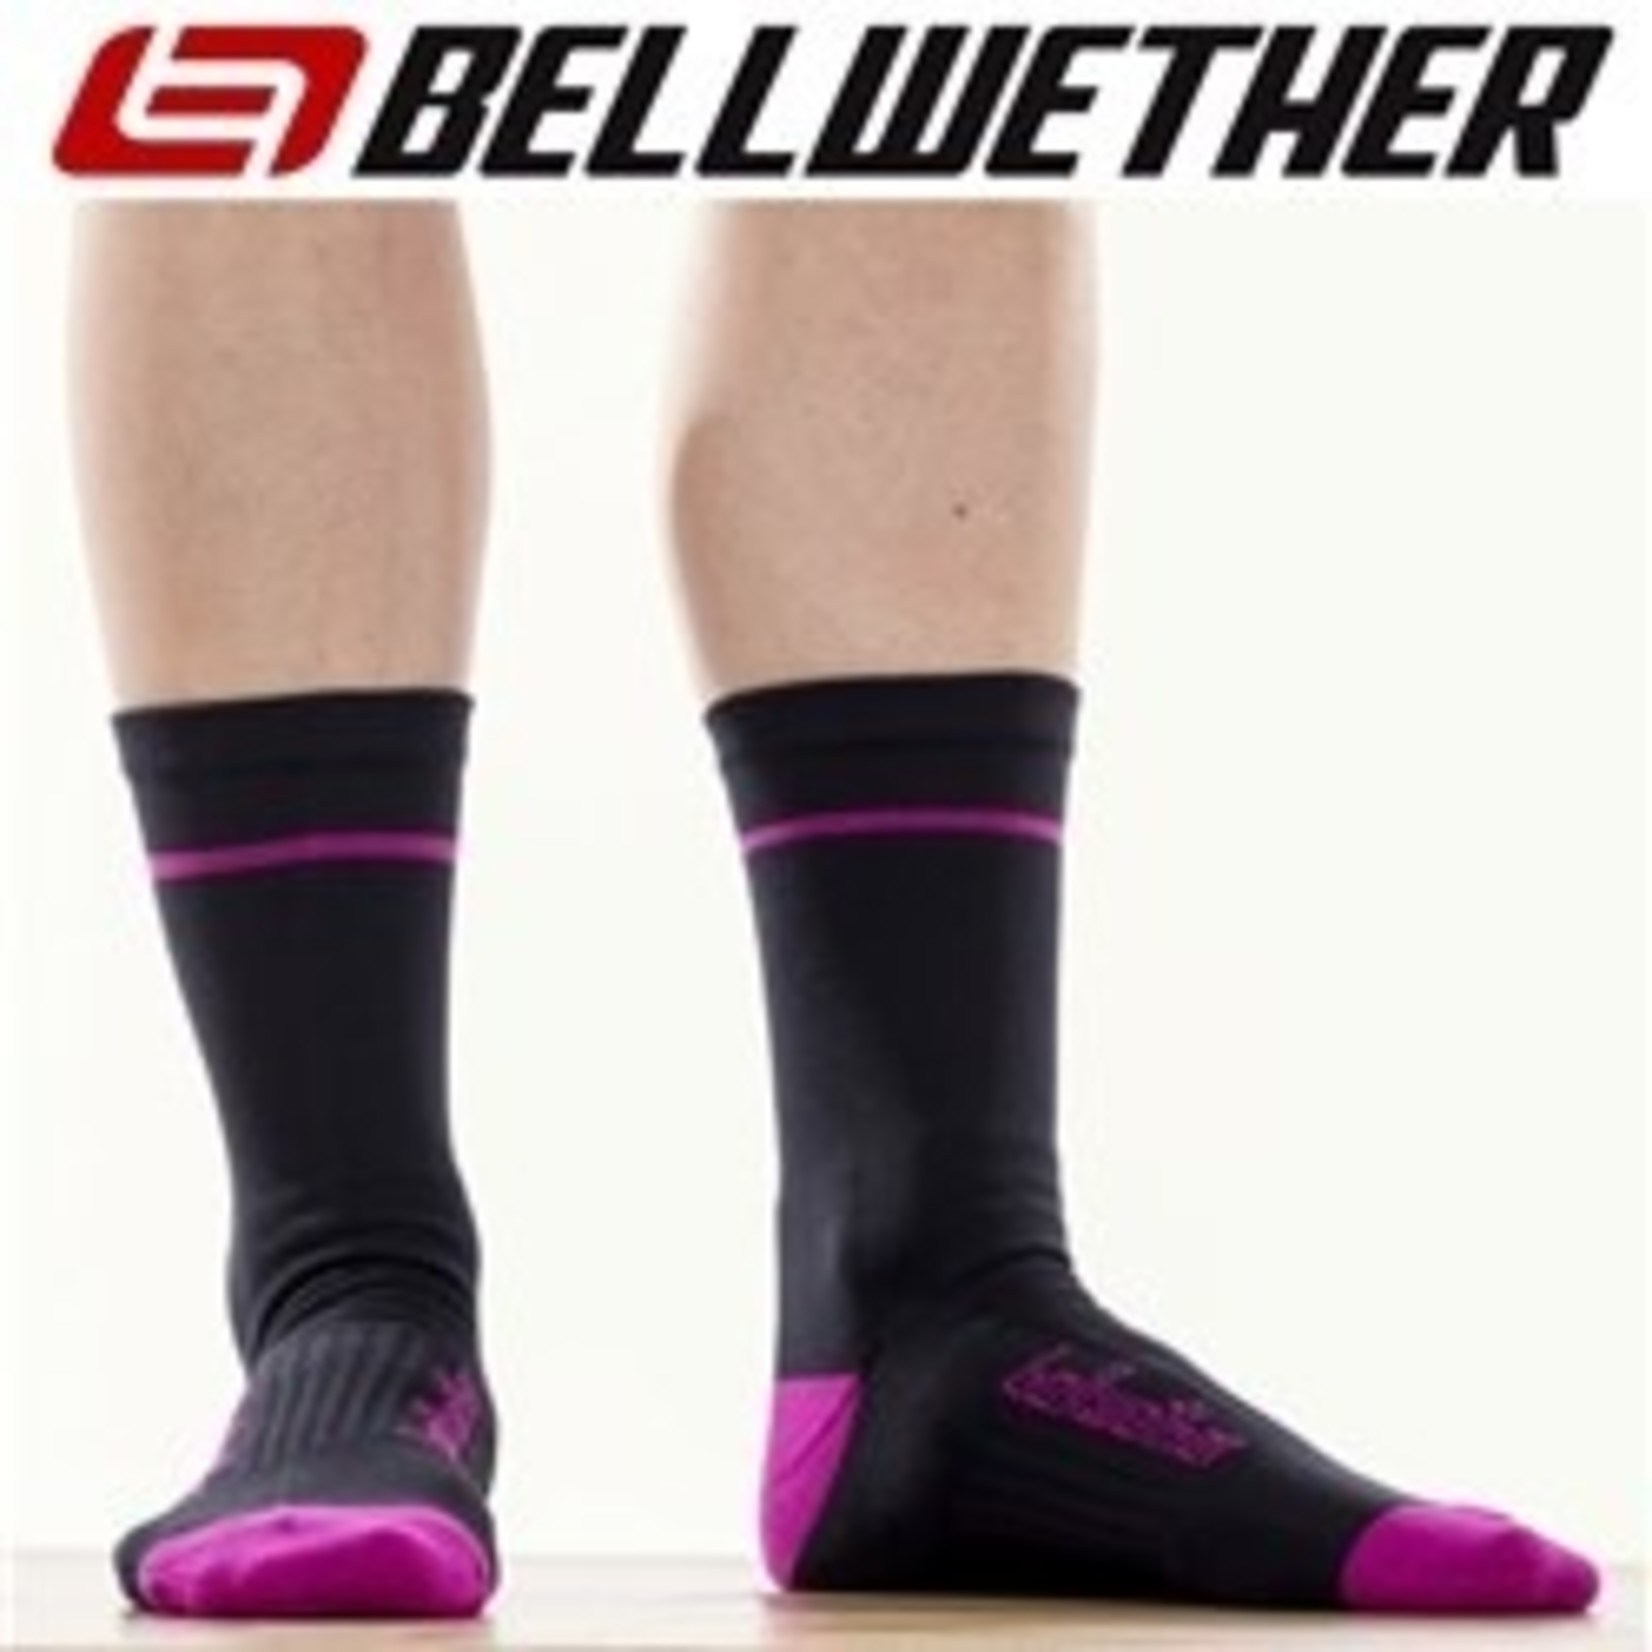 Bellwether Bellwether Cycling Sock - Optime Sock - Black/Fuchsia